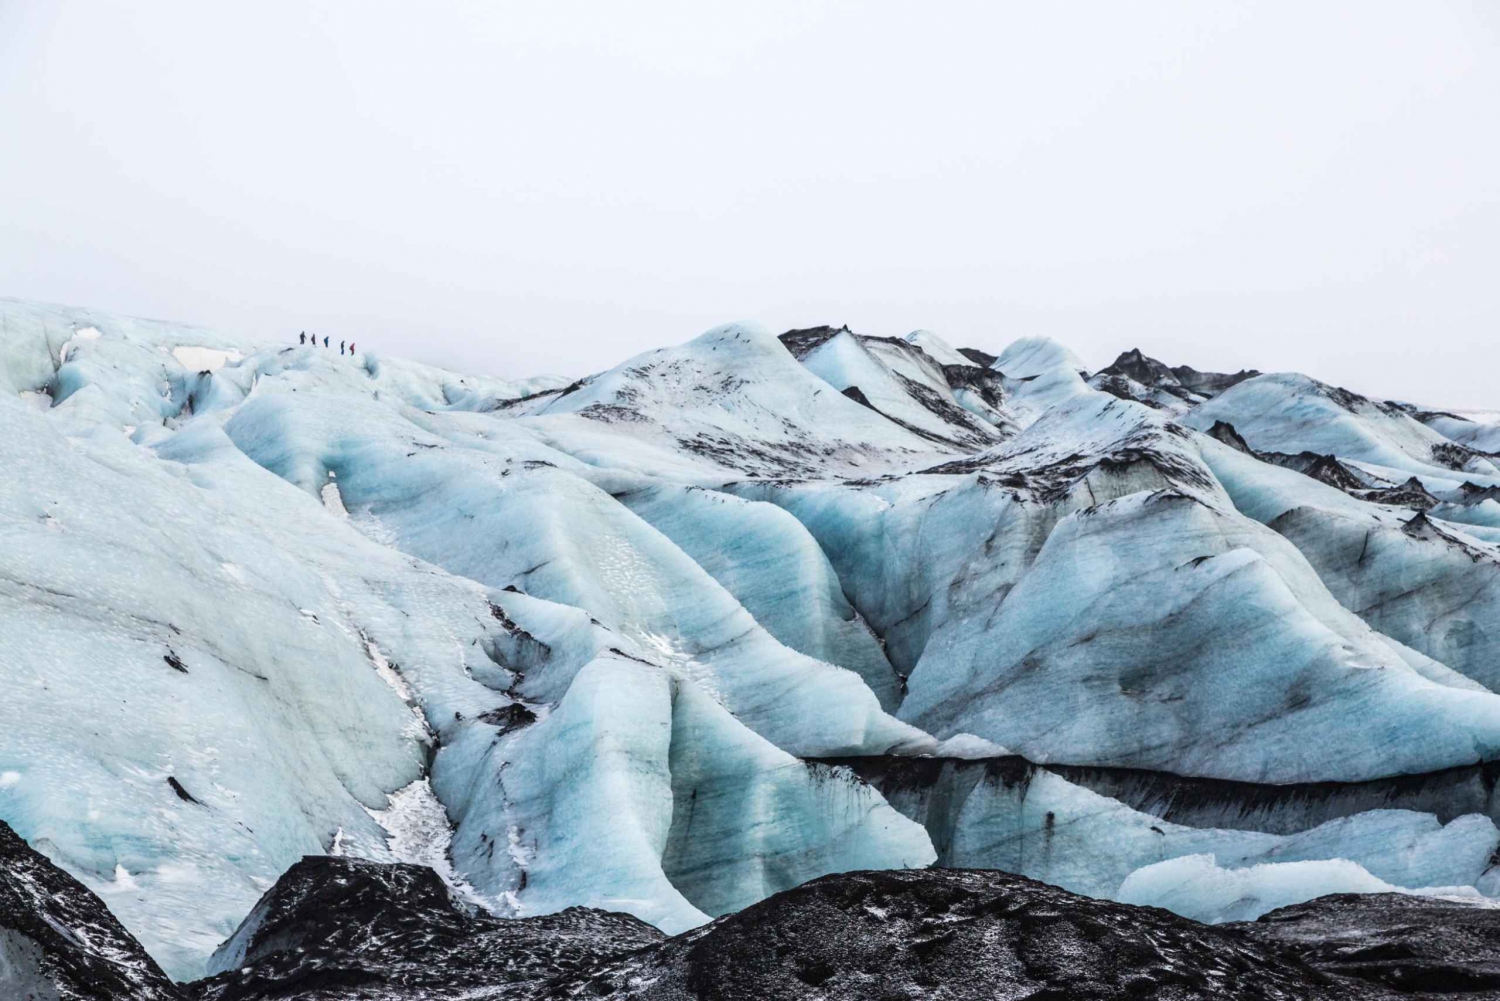 Reykjavik/Sólheimajökull: Glacier Hiking & Ice Climbing Trip